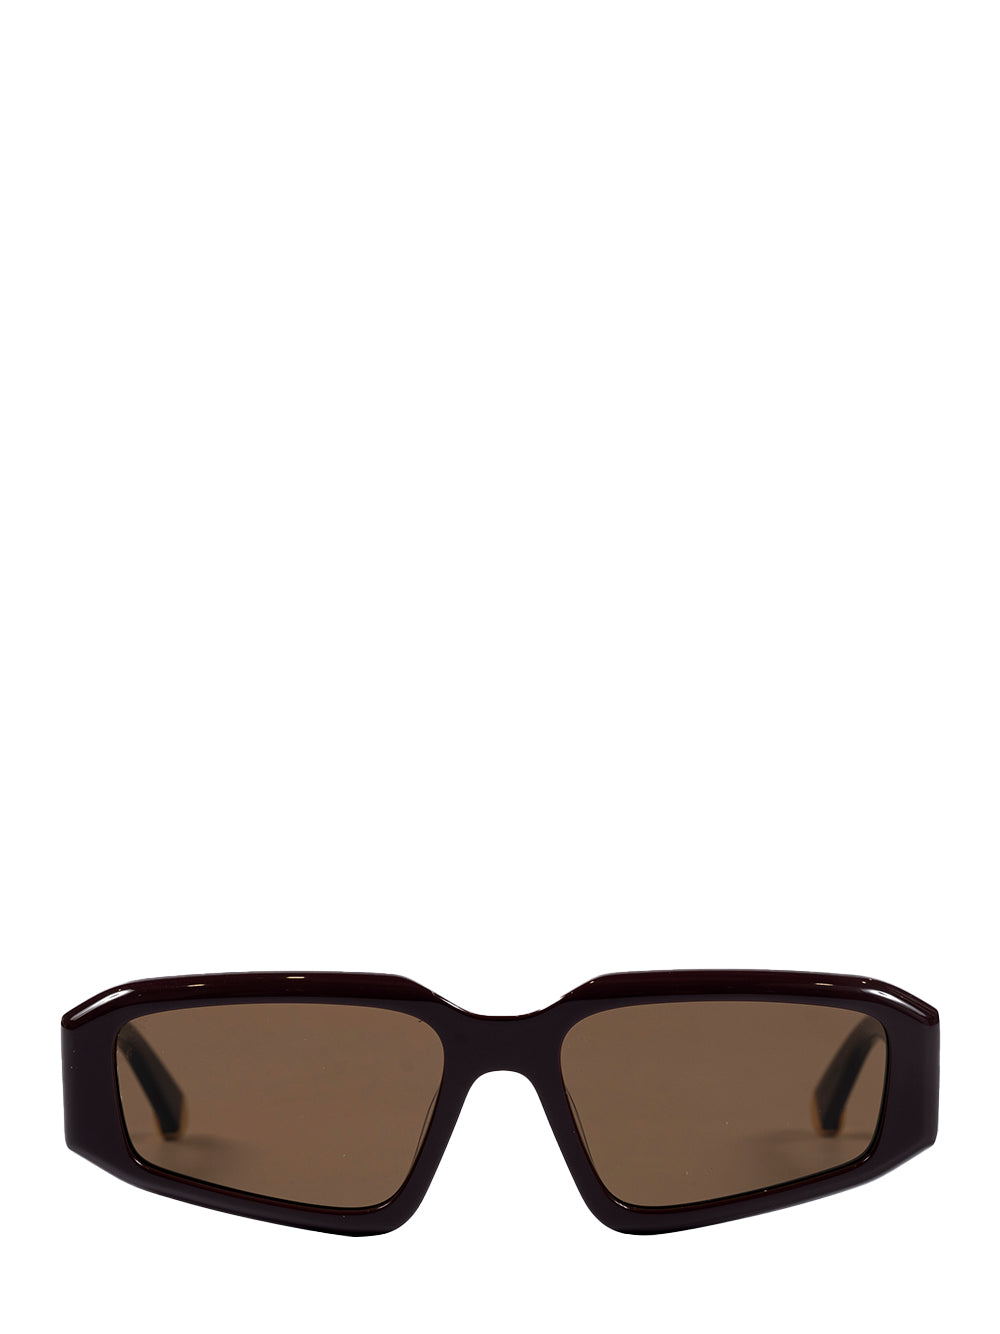 Sc40079i Acetate Sunglasses (Shiny Dark Brown/Brown)